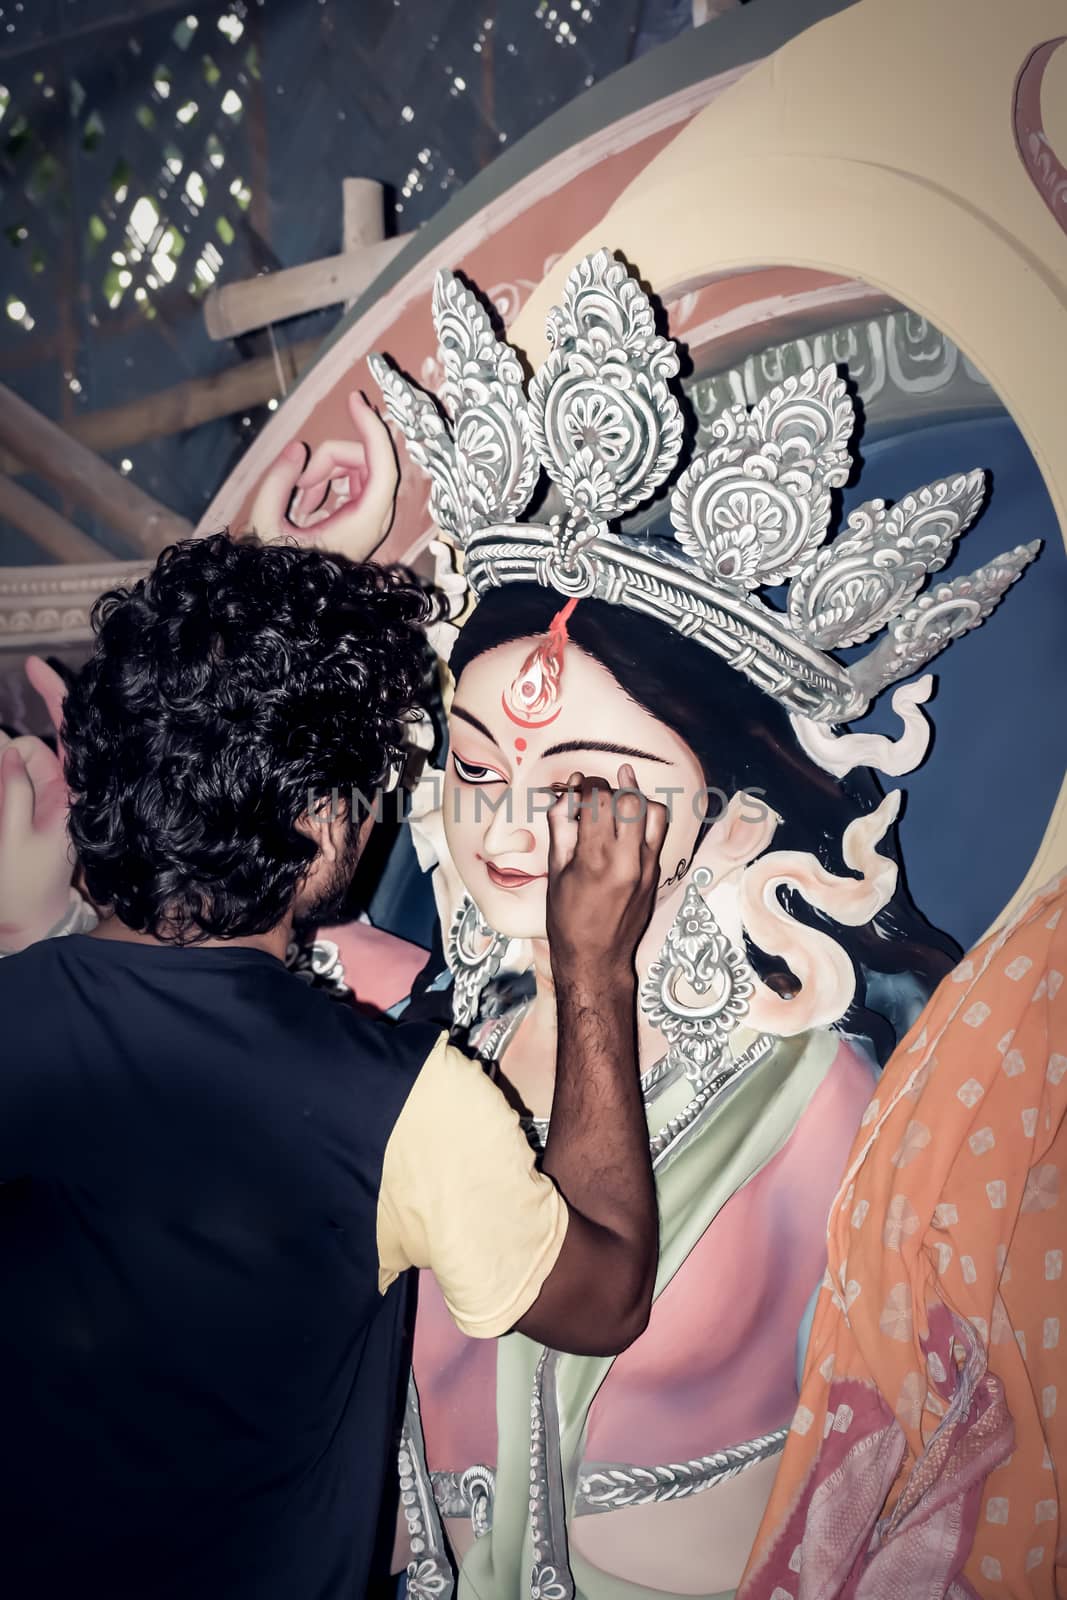 Painting the Eye over clay Idol of Hindu Goddess Durga. An idol making process of Pottery Artist at Kumartuli during Durga Puja Festival. Kolkata. West Bengal, India